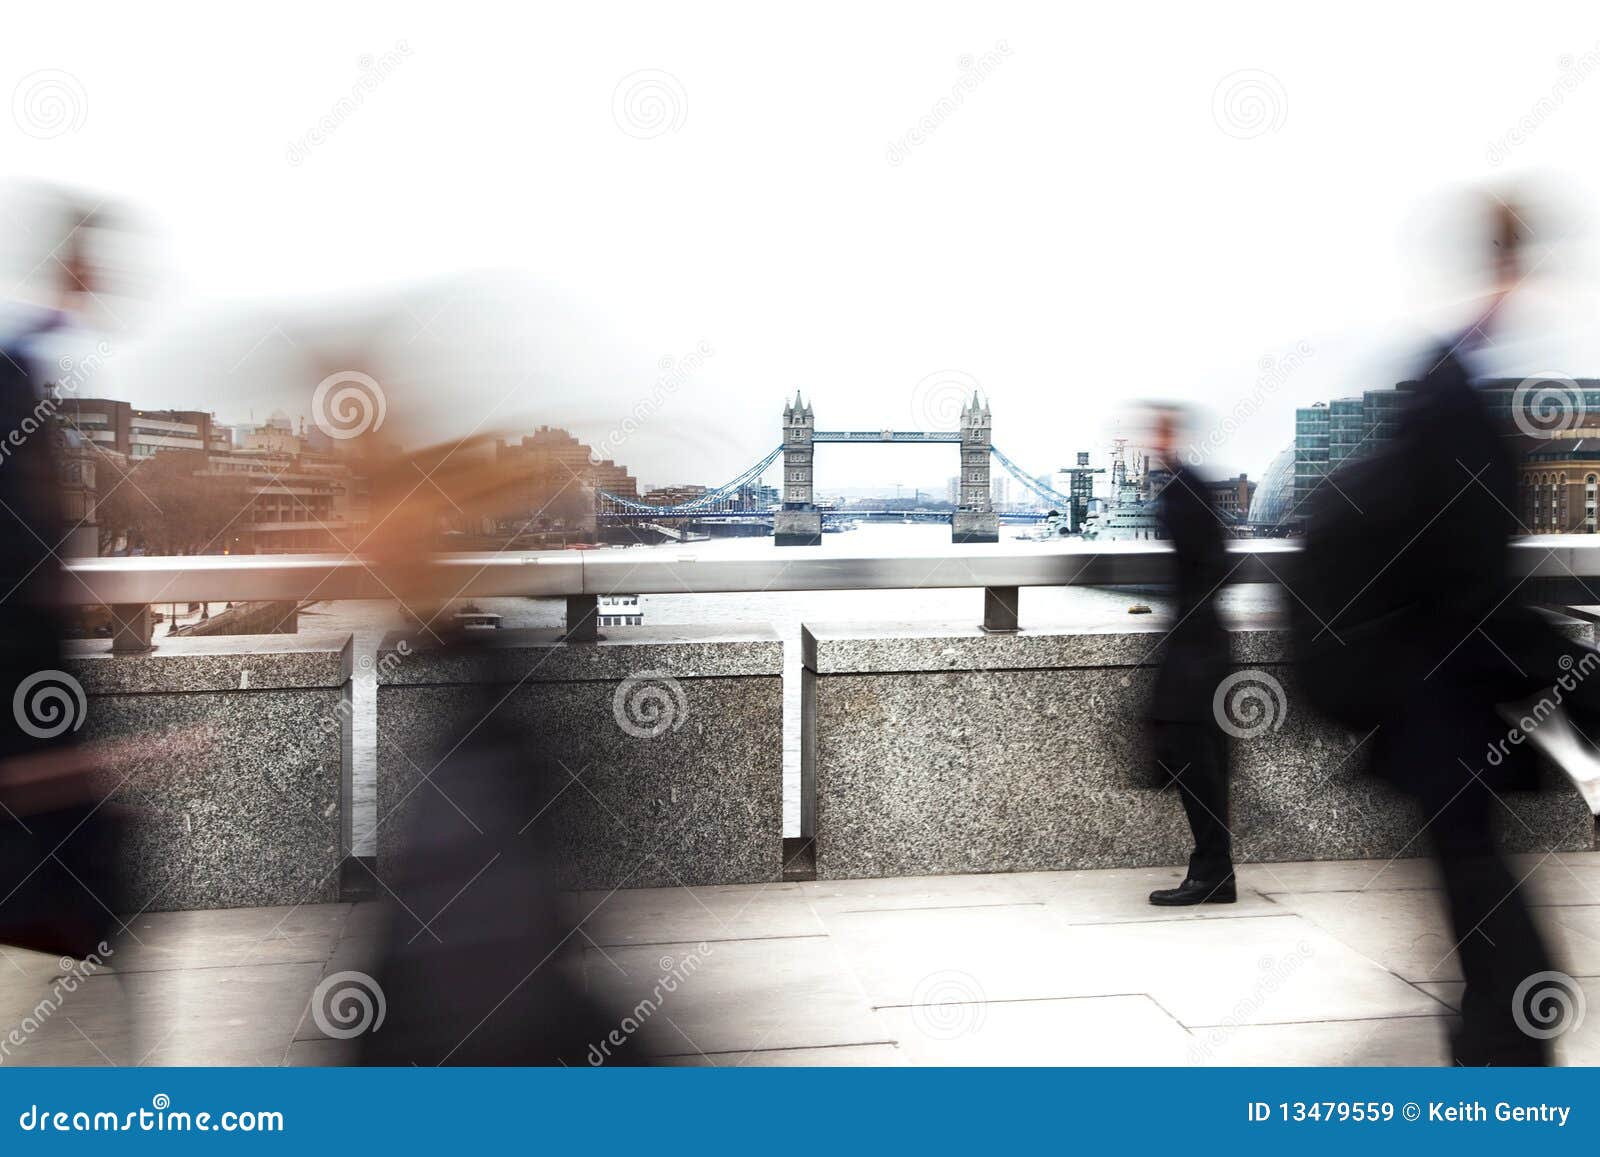 blurred london commuters